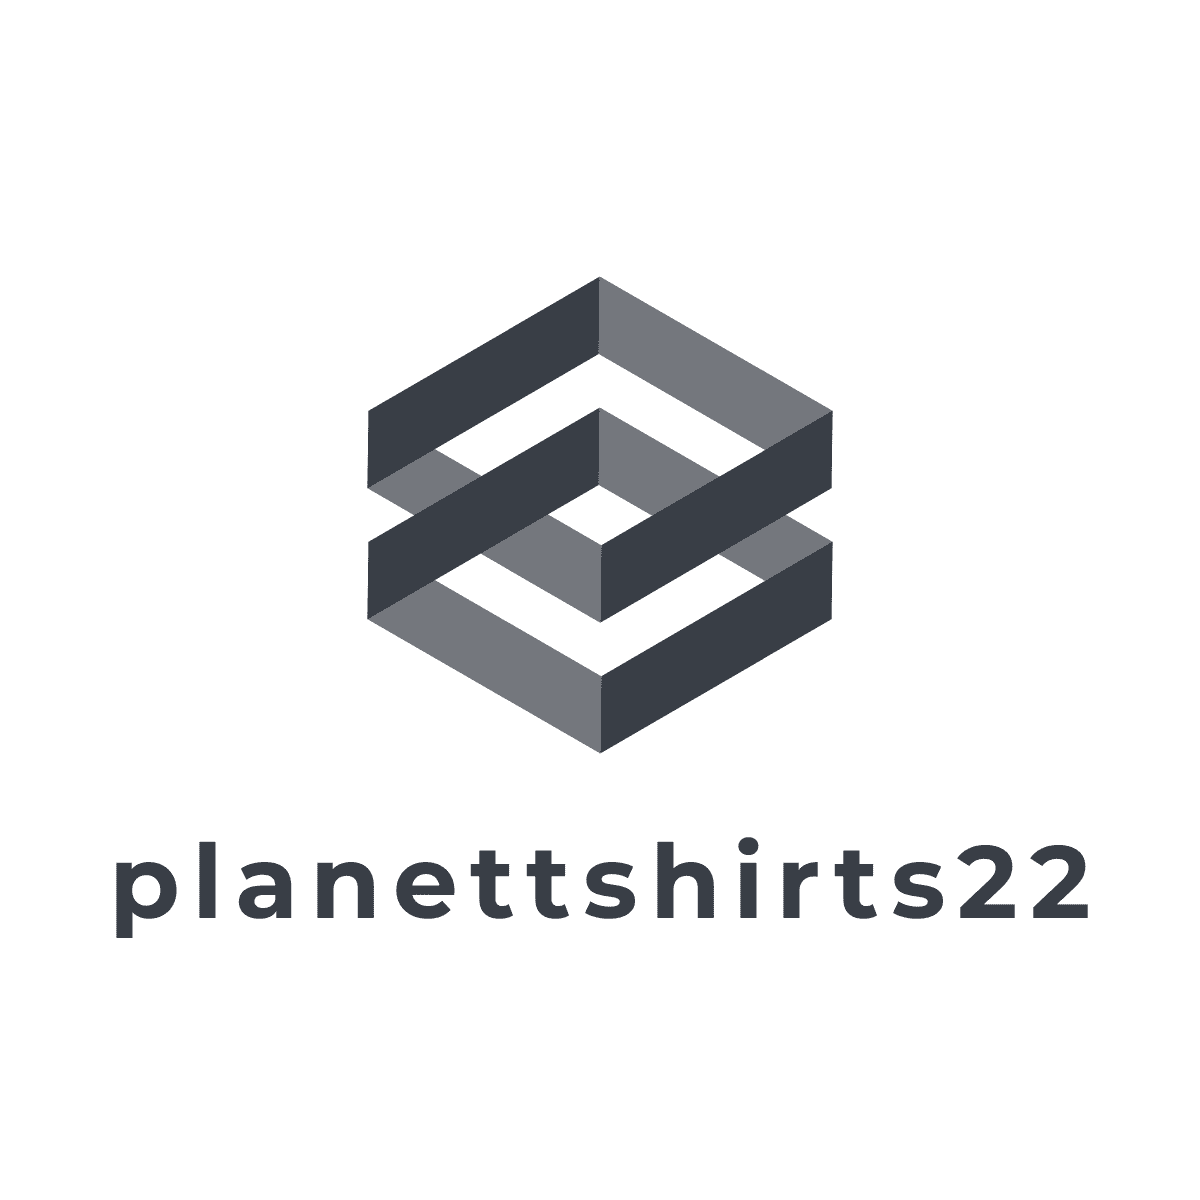 Planet T-Shirts